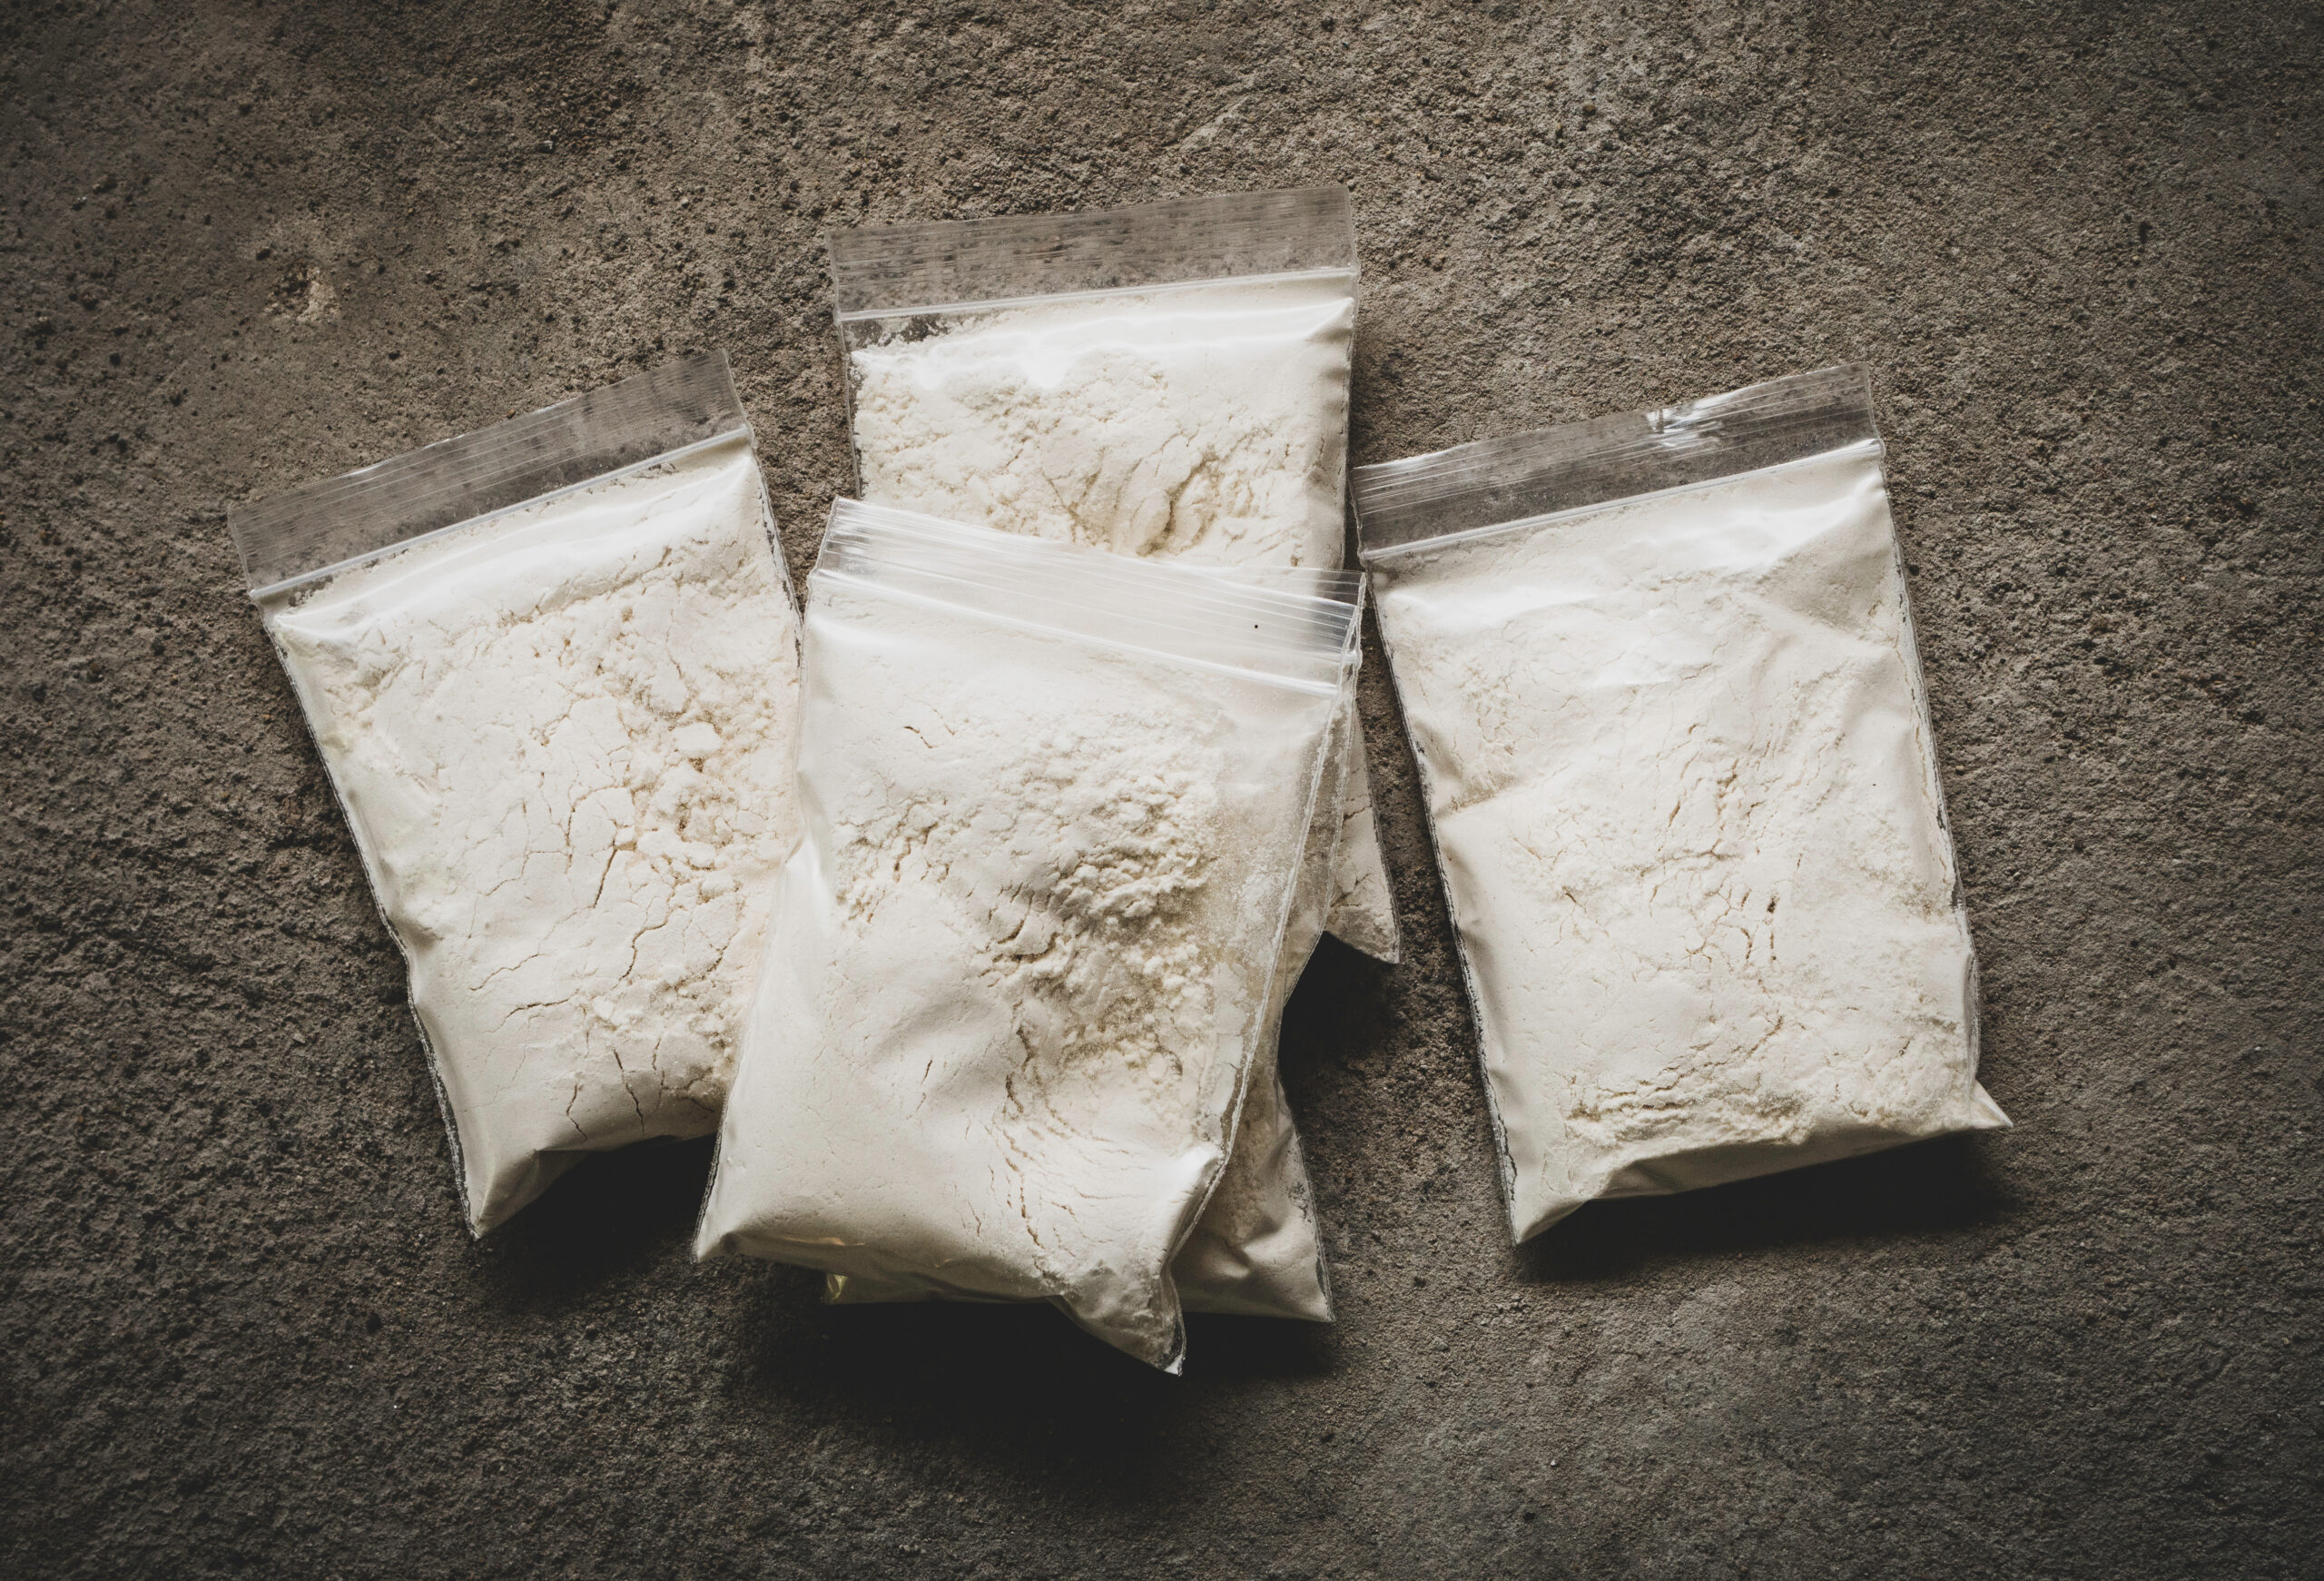 white powder heroin in bags